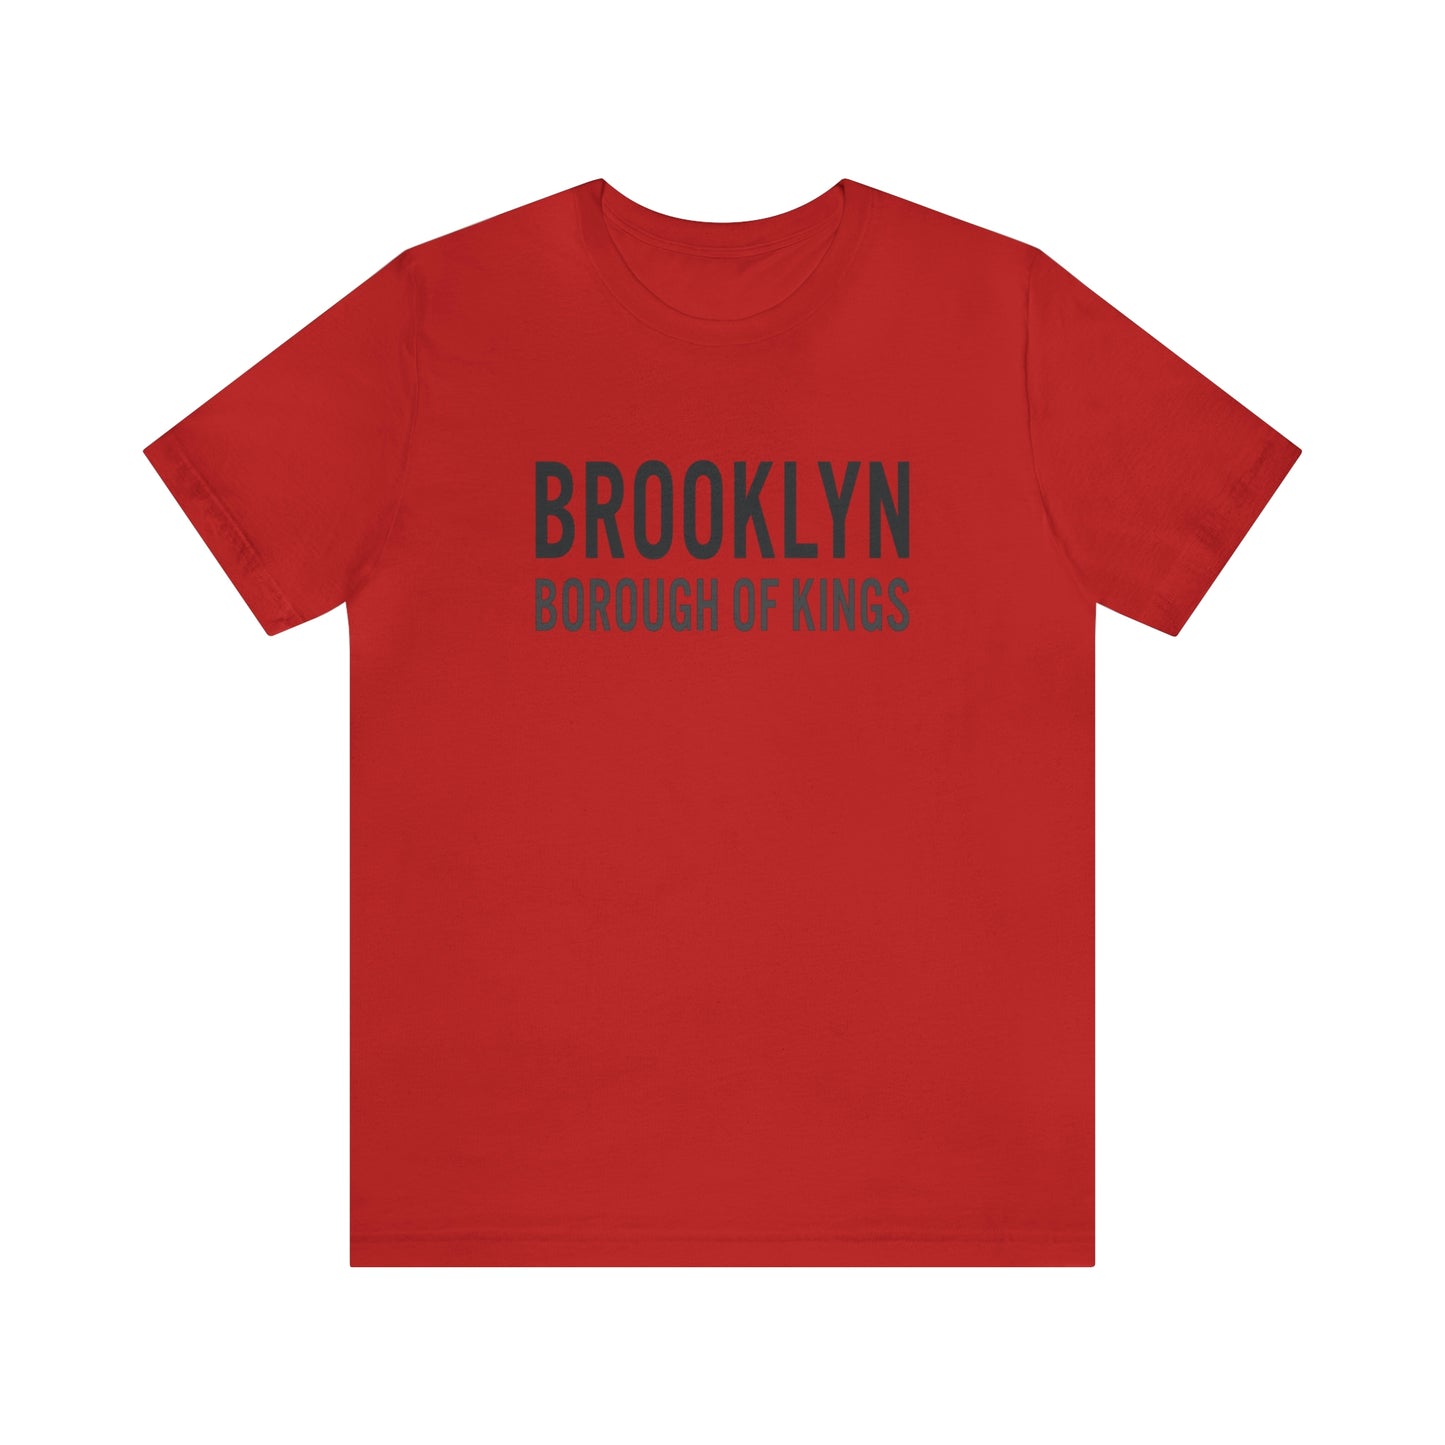 Brooklyn Borough of Kings - Unisex T-Shirt